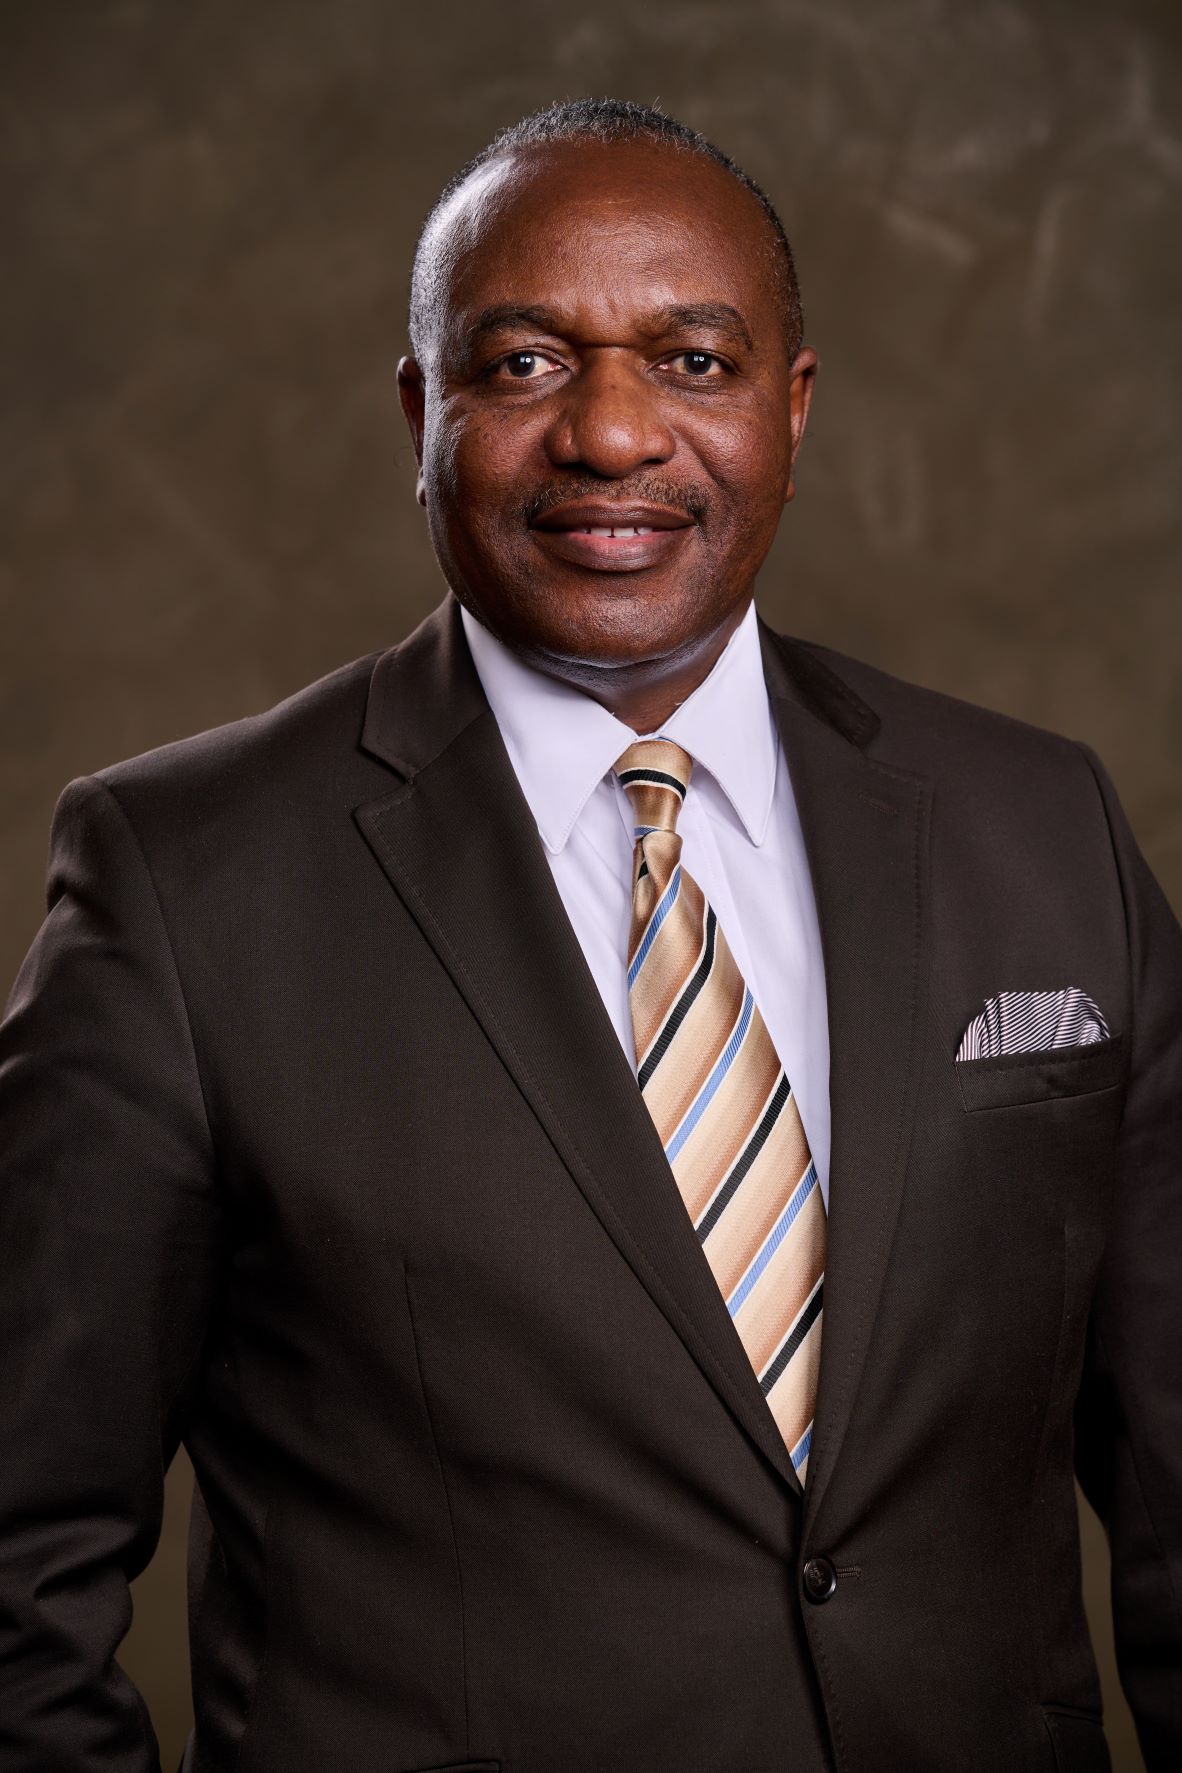 Veston Malango, CEO, Chamber of Mines of Namibia